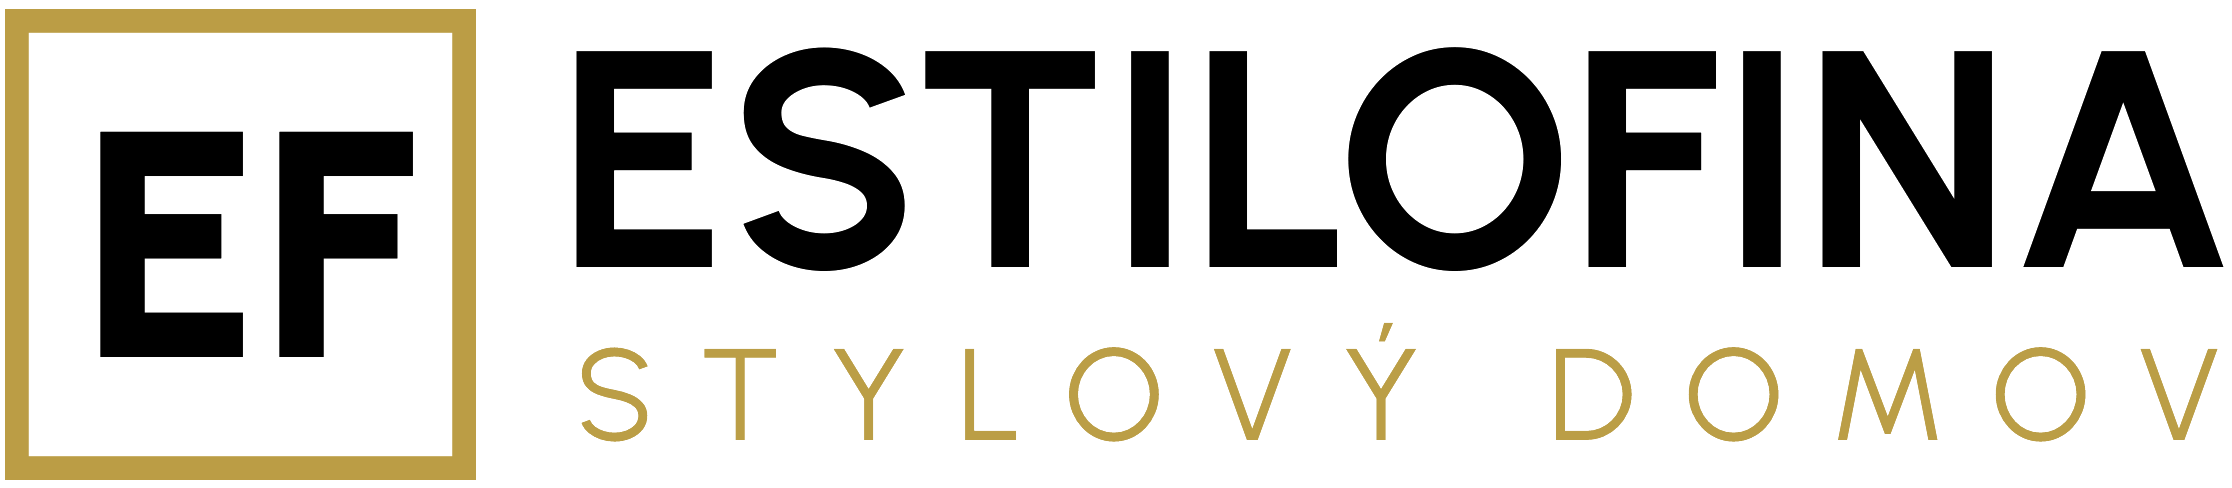 Estilofina-nabytek.cz Logo